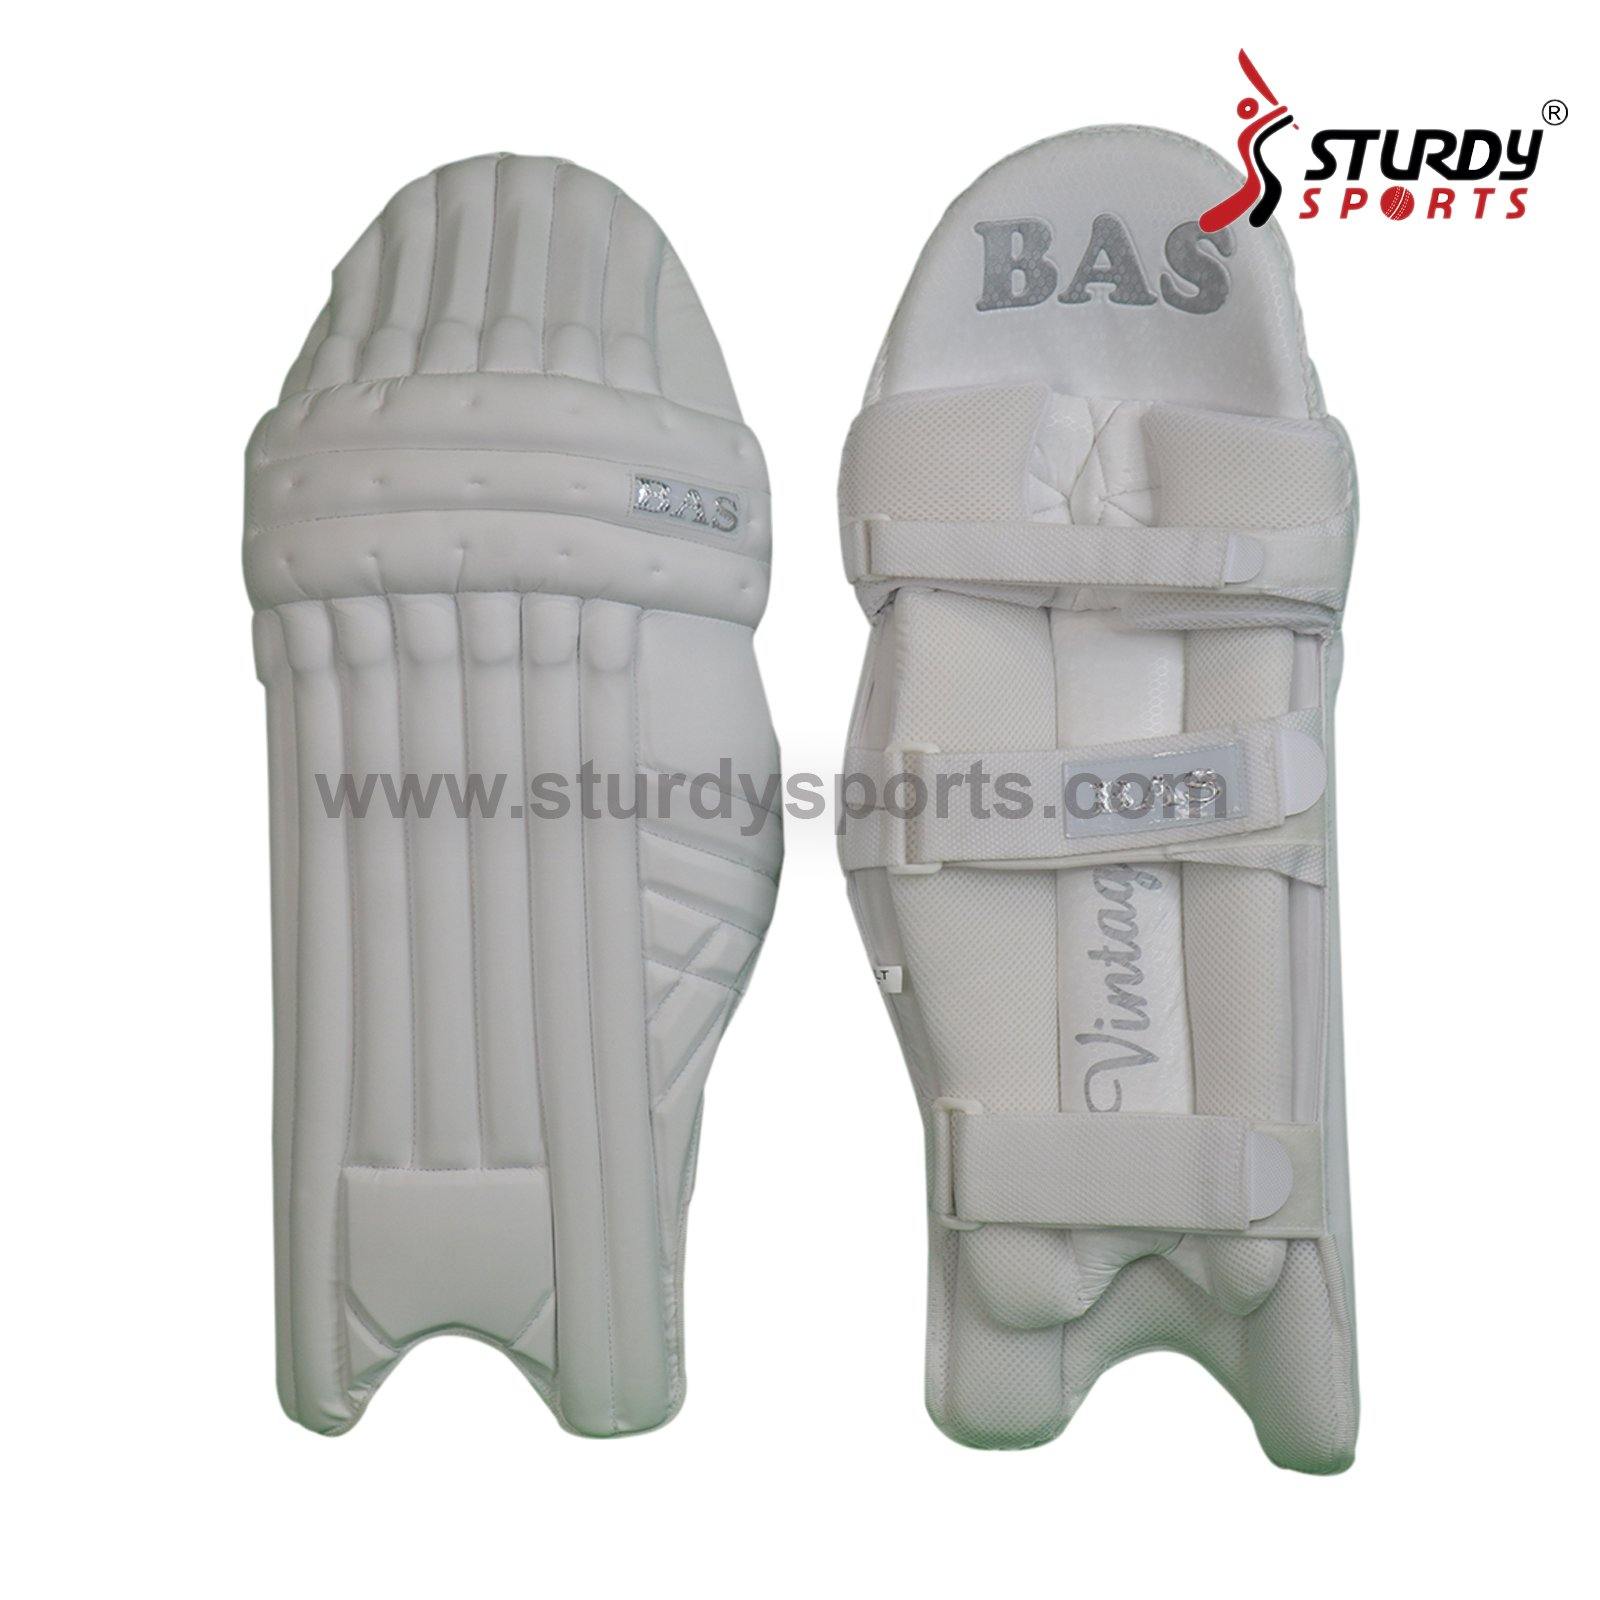 BAS Vintage Batting Cricket Pads - Senior